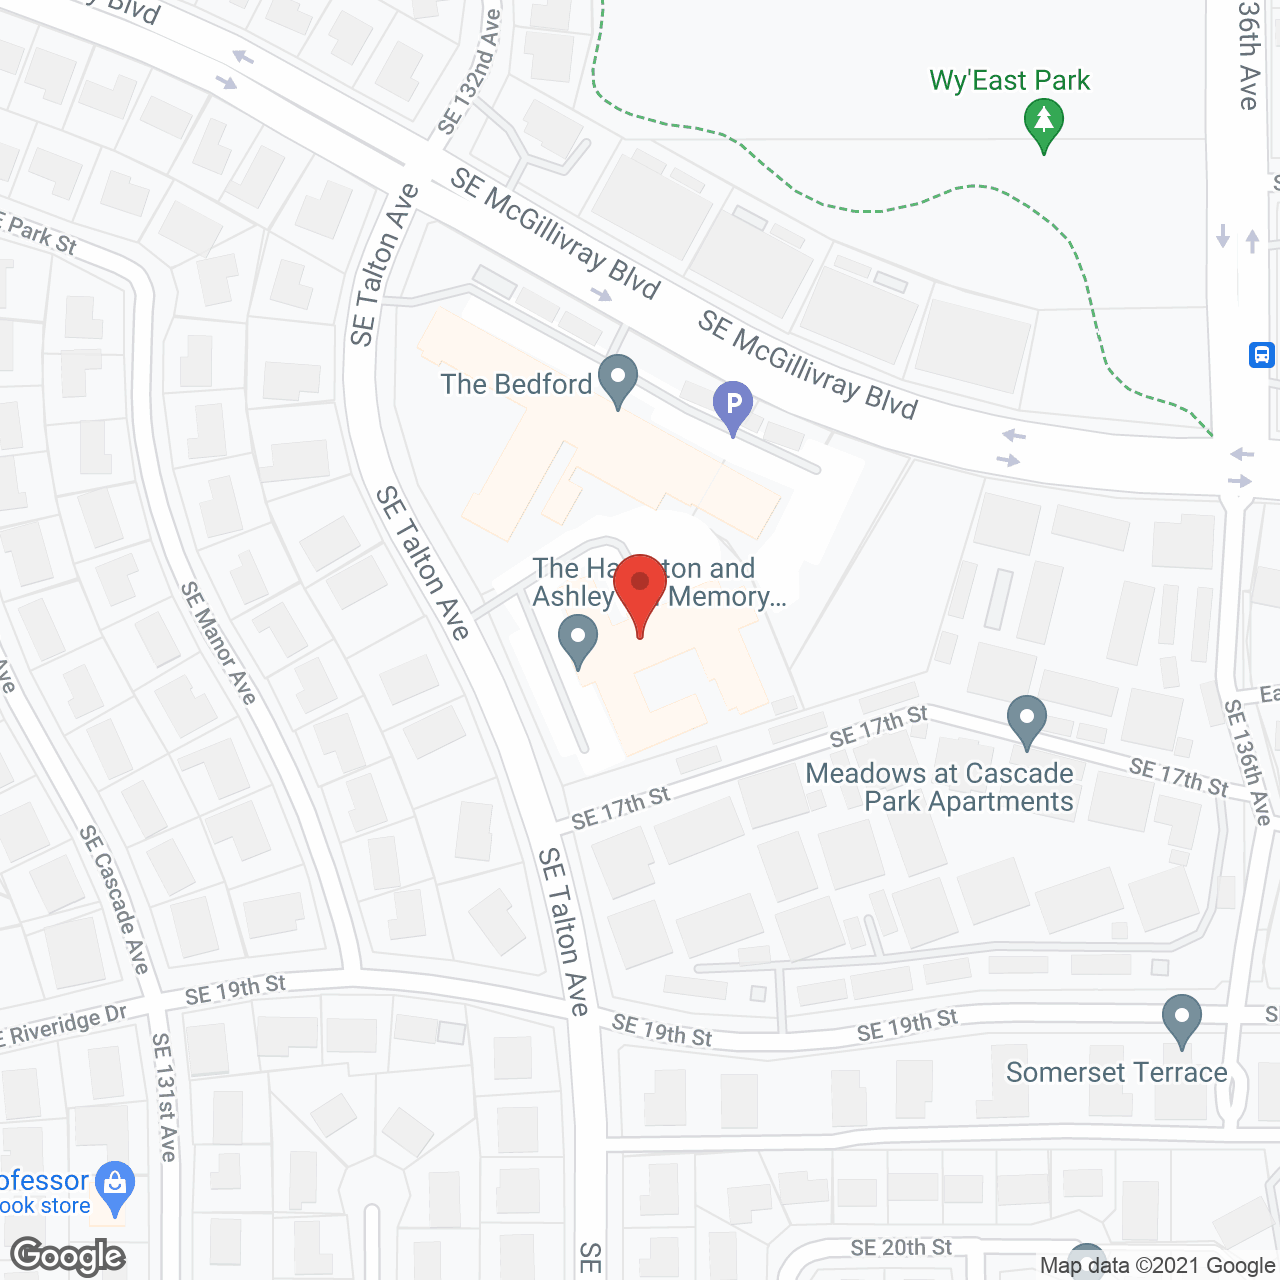 The Hampton & Ashley Inn in google map